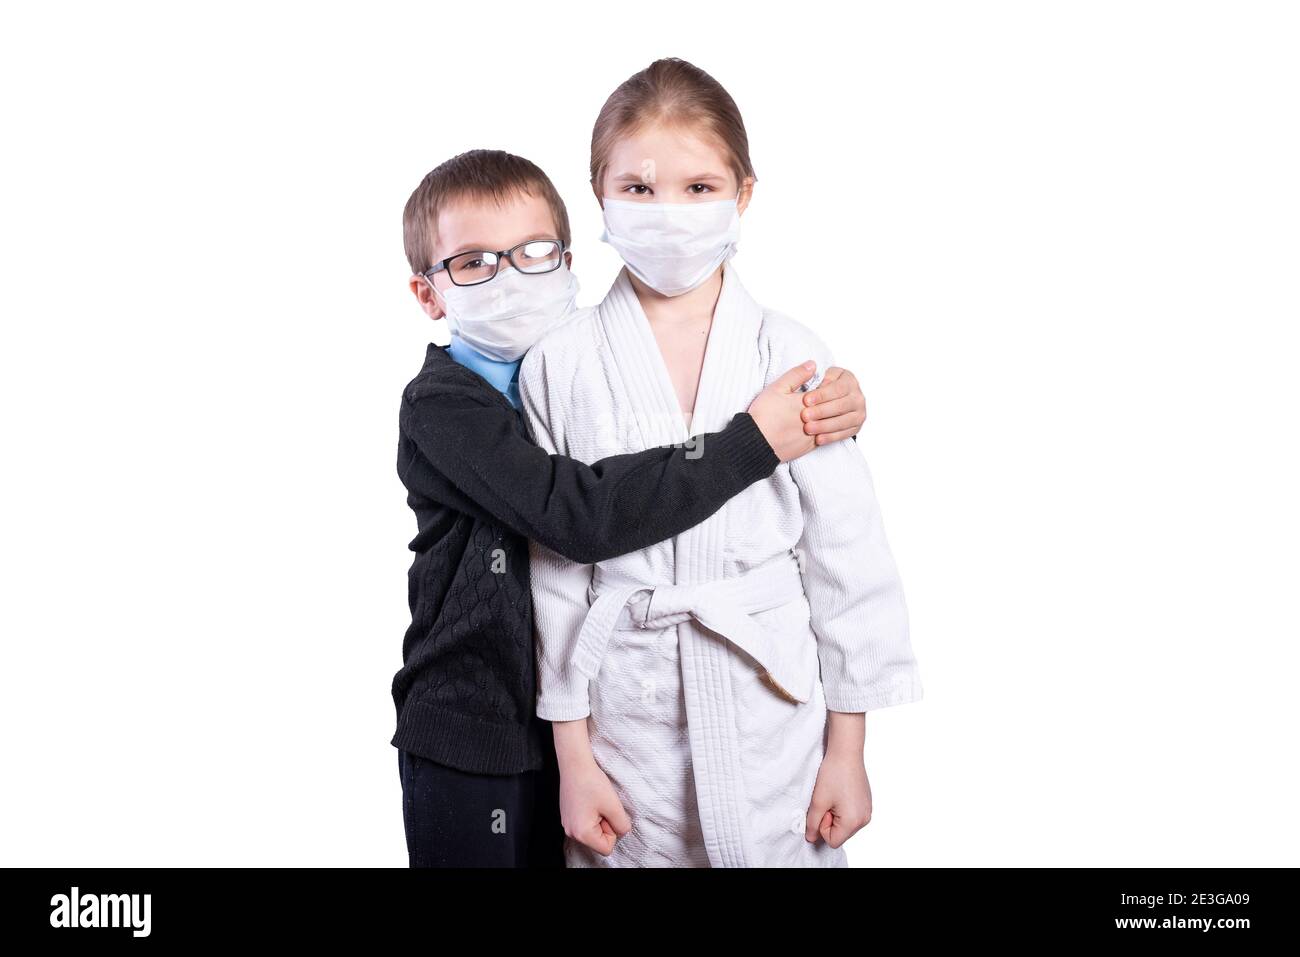 Boy schoolboy hugs a girl athlete. Masked. Isolated on white background. High quality photo Stock Photo